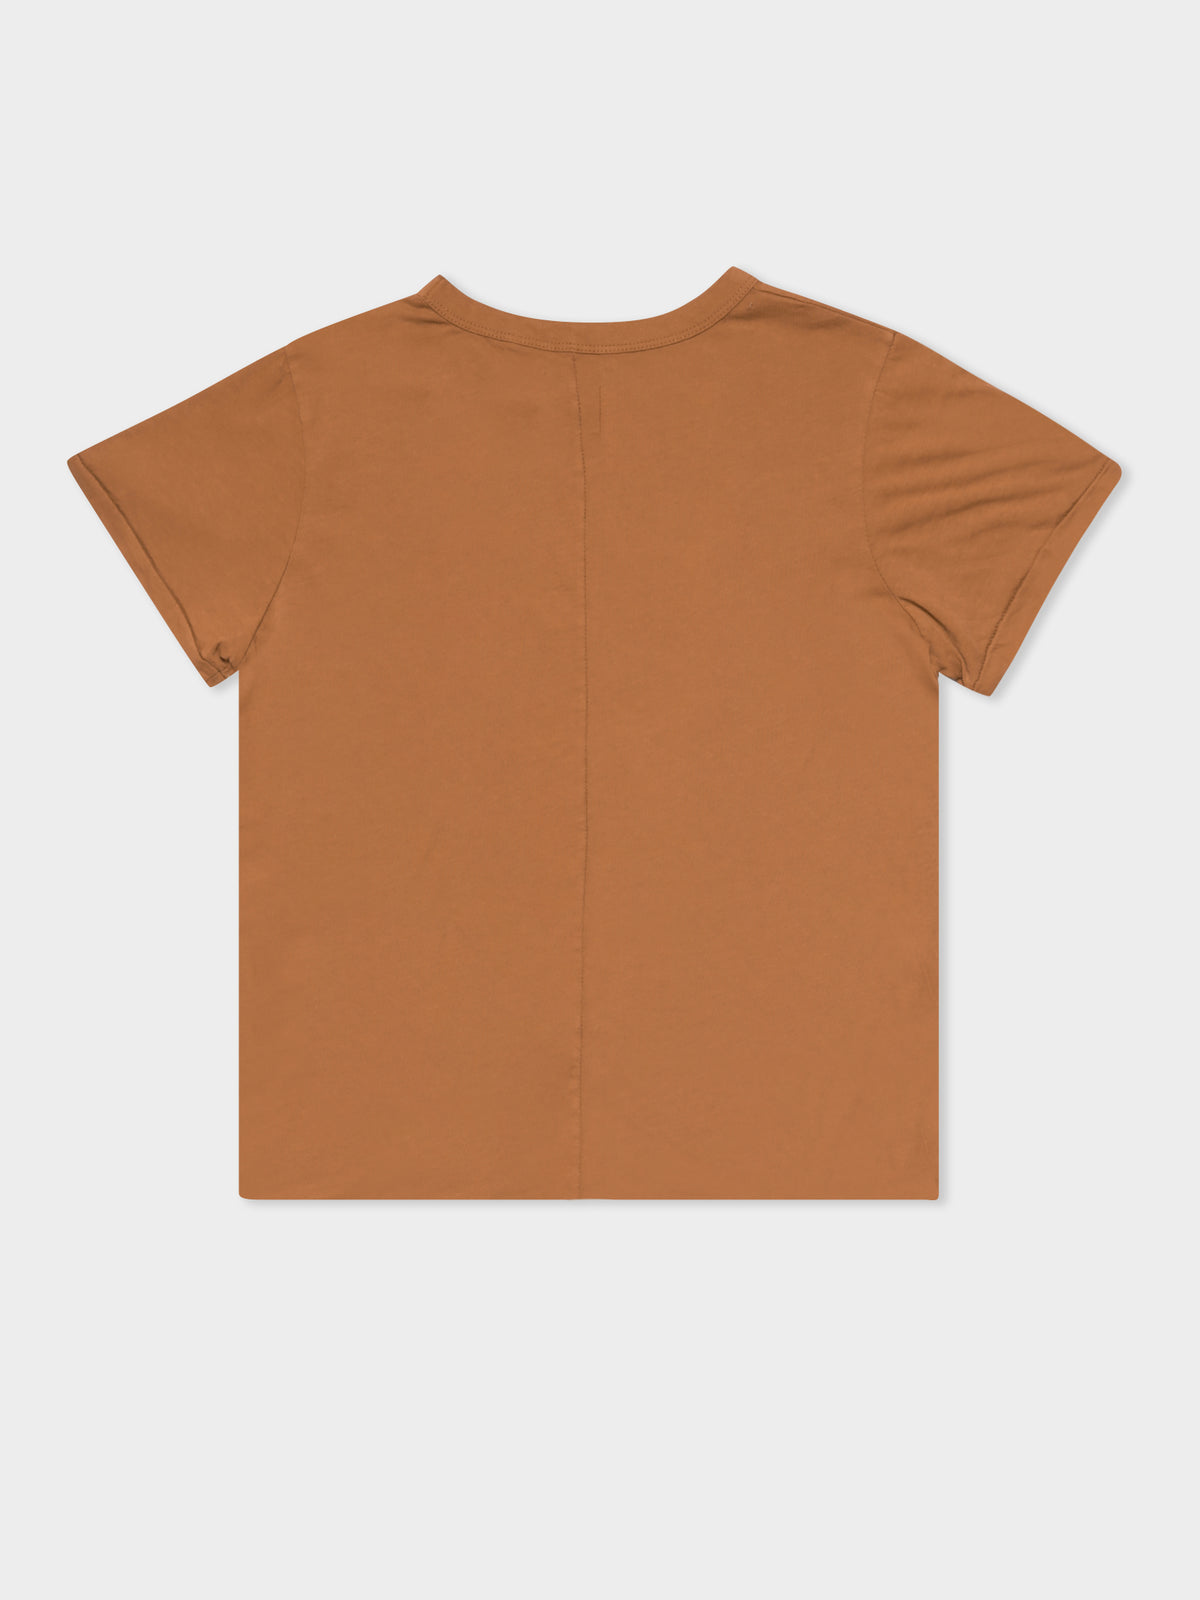 Minimal Thrills Relaxed Crop T-Shirt in Golden Brown